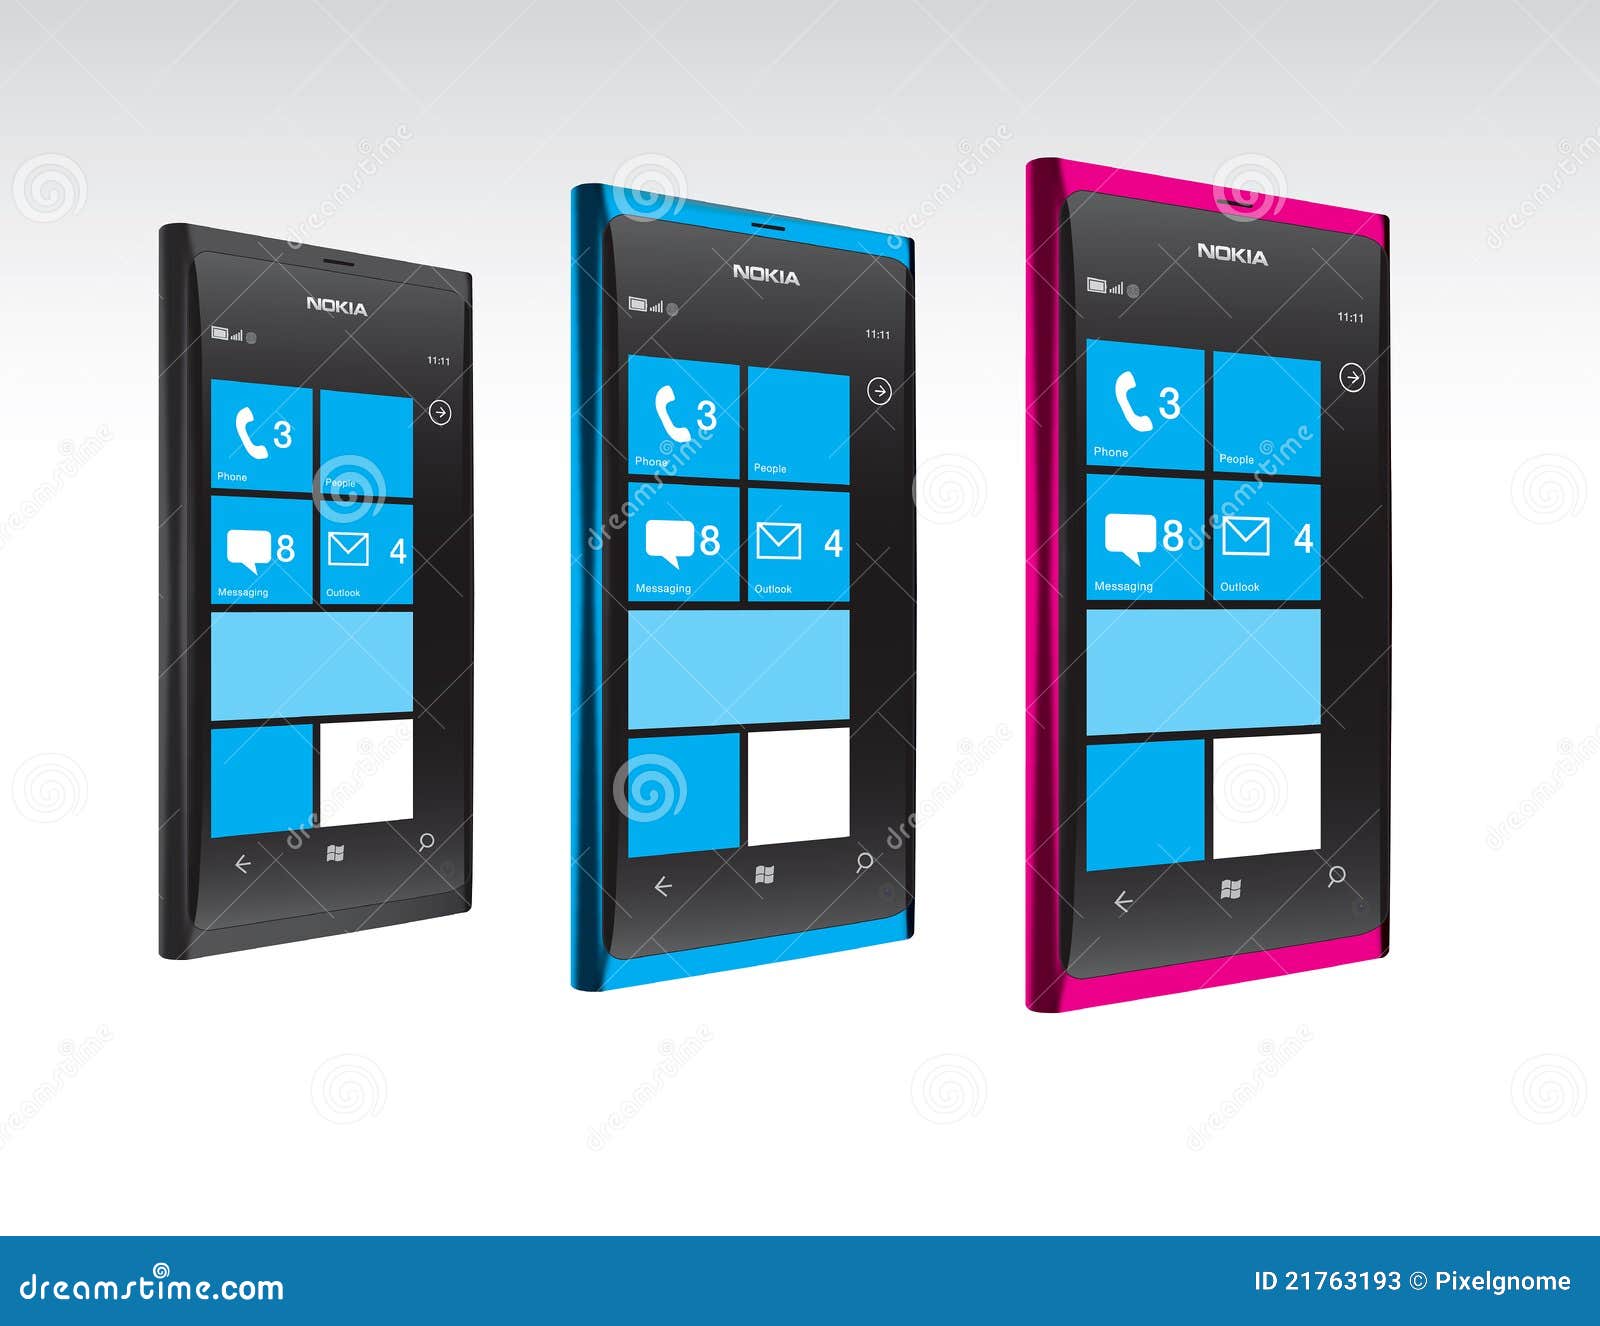 Nokia Lumia Windows Phones In Color Editorial Stock Photo - Image: 21763193